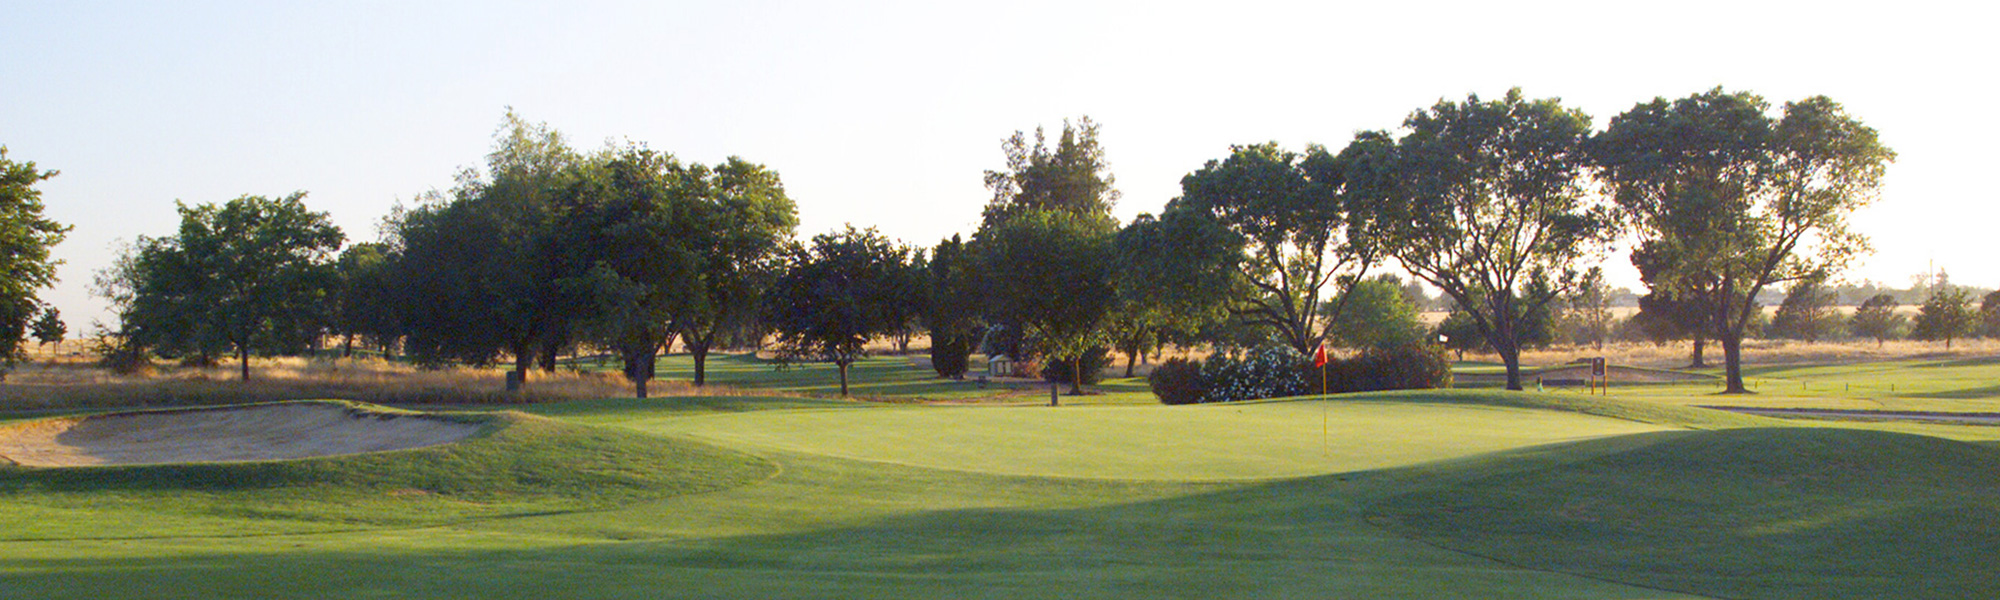 Mather Golf Course